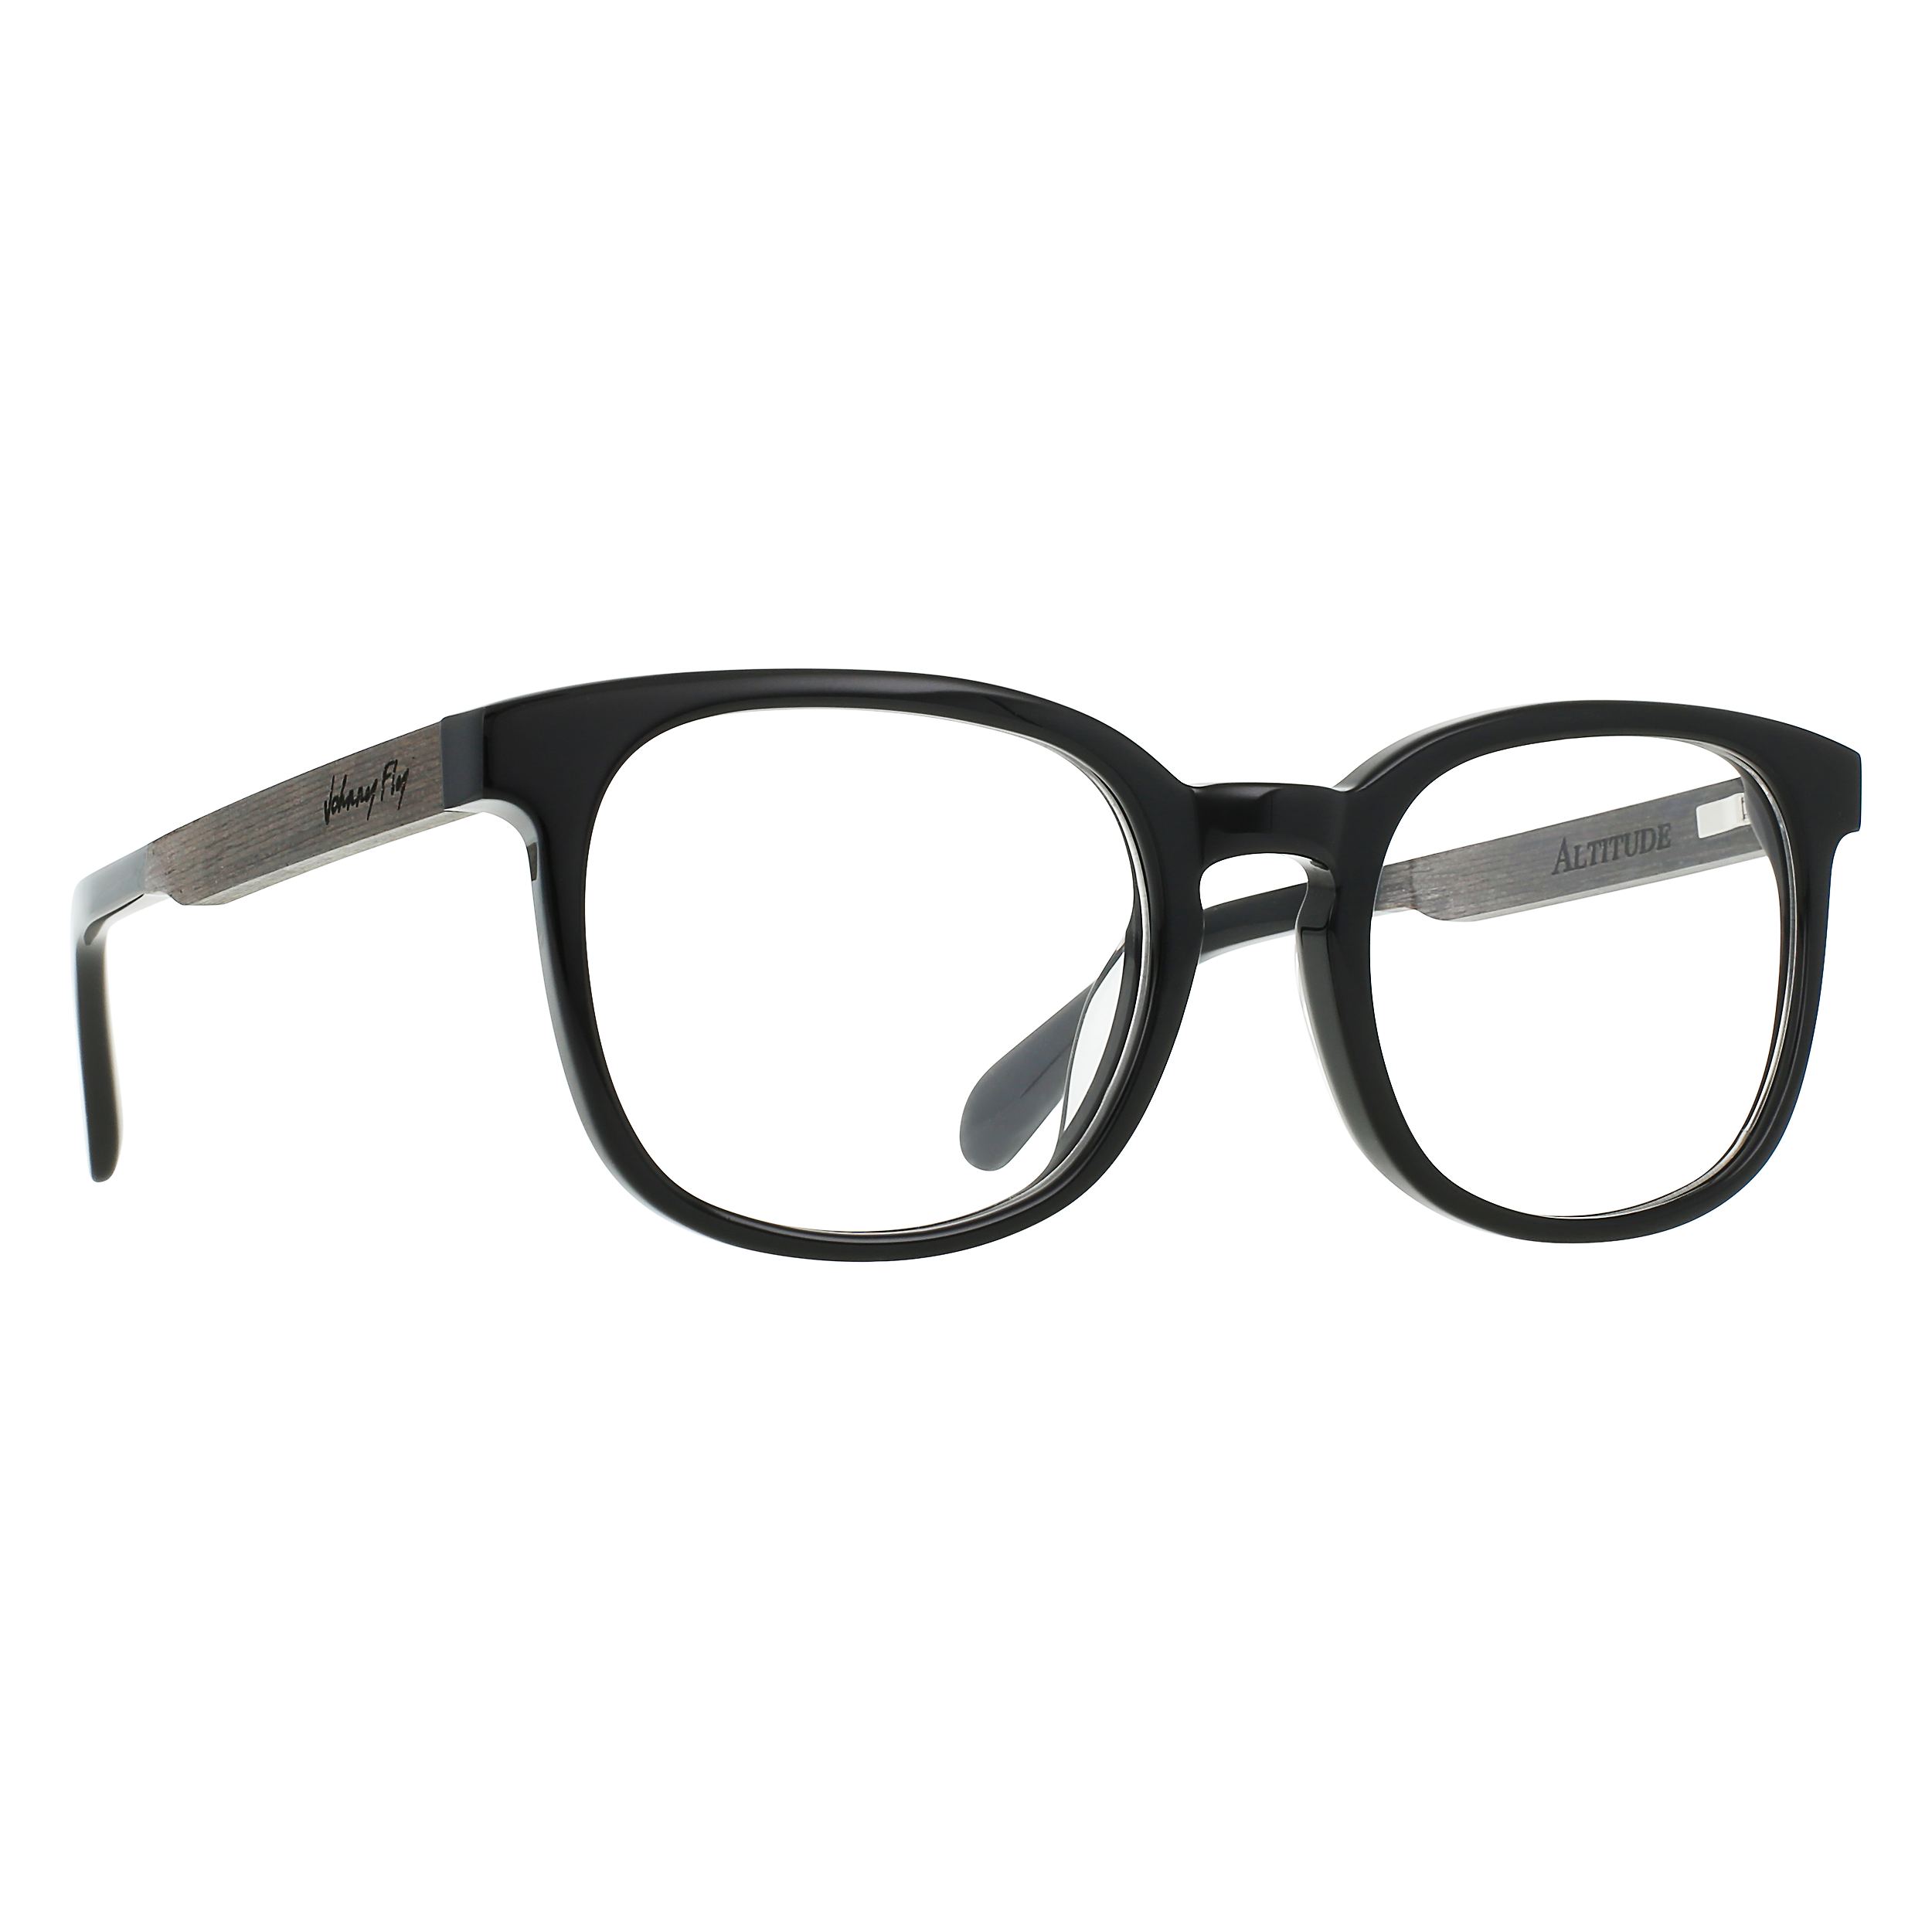 ALTITUDE BLUGARD - Gloss Black - Blue Light Glasses - Johnny Fly Eyewear #color_gloss-black